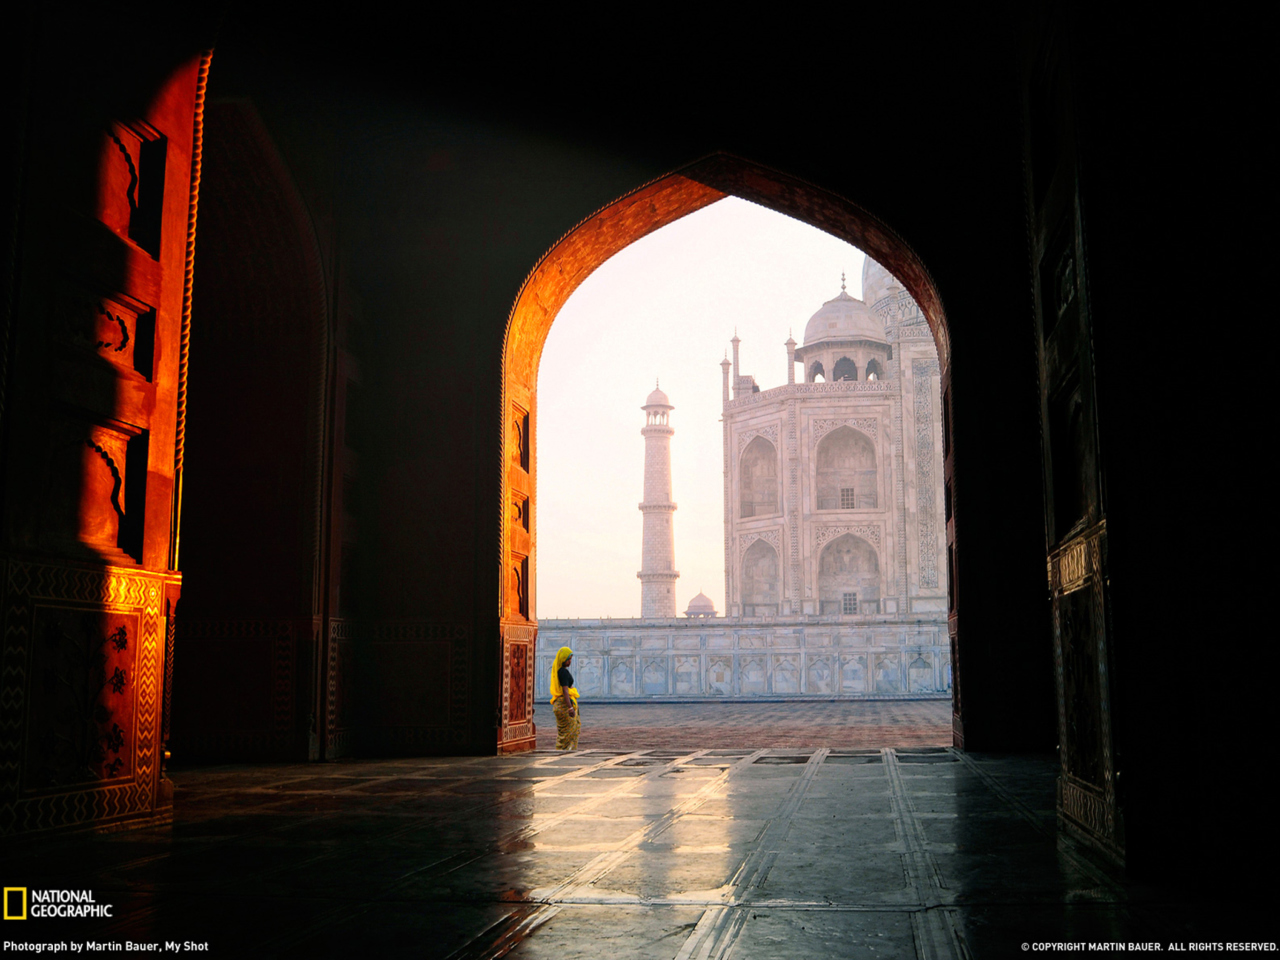 Das Taj Mahal, India Wallpaper 1280x960